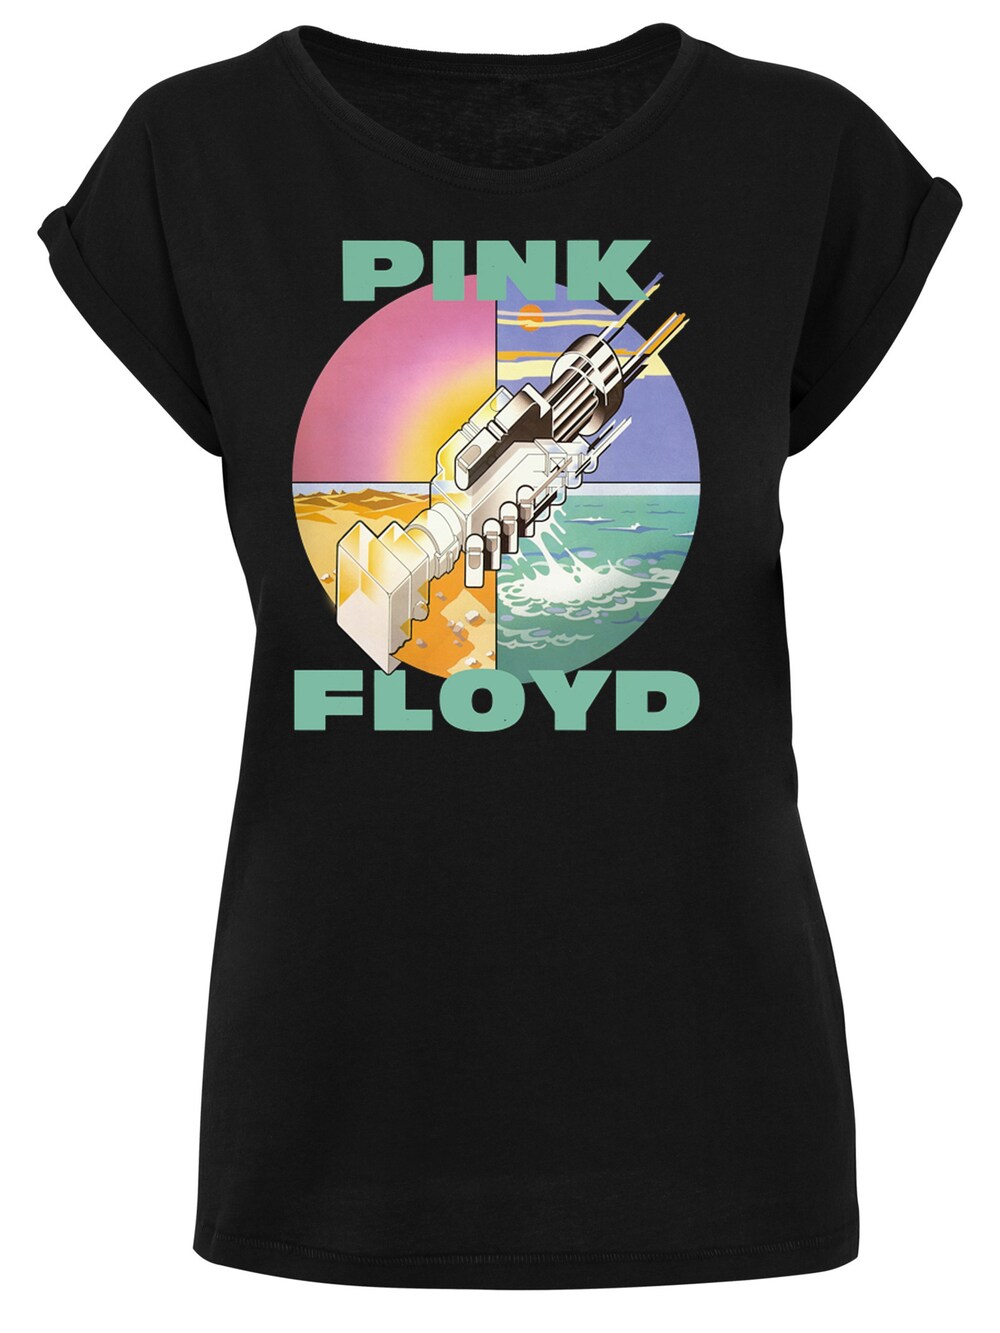 Рубашка F4Nt4Stic Pink Floyd Wish You Were Here, черный pink floyd wish you were here mini lp 2017 sony cd japan компакт диск 1шт rick wright